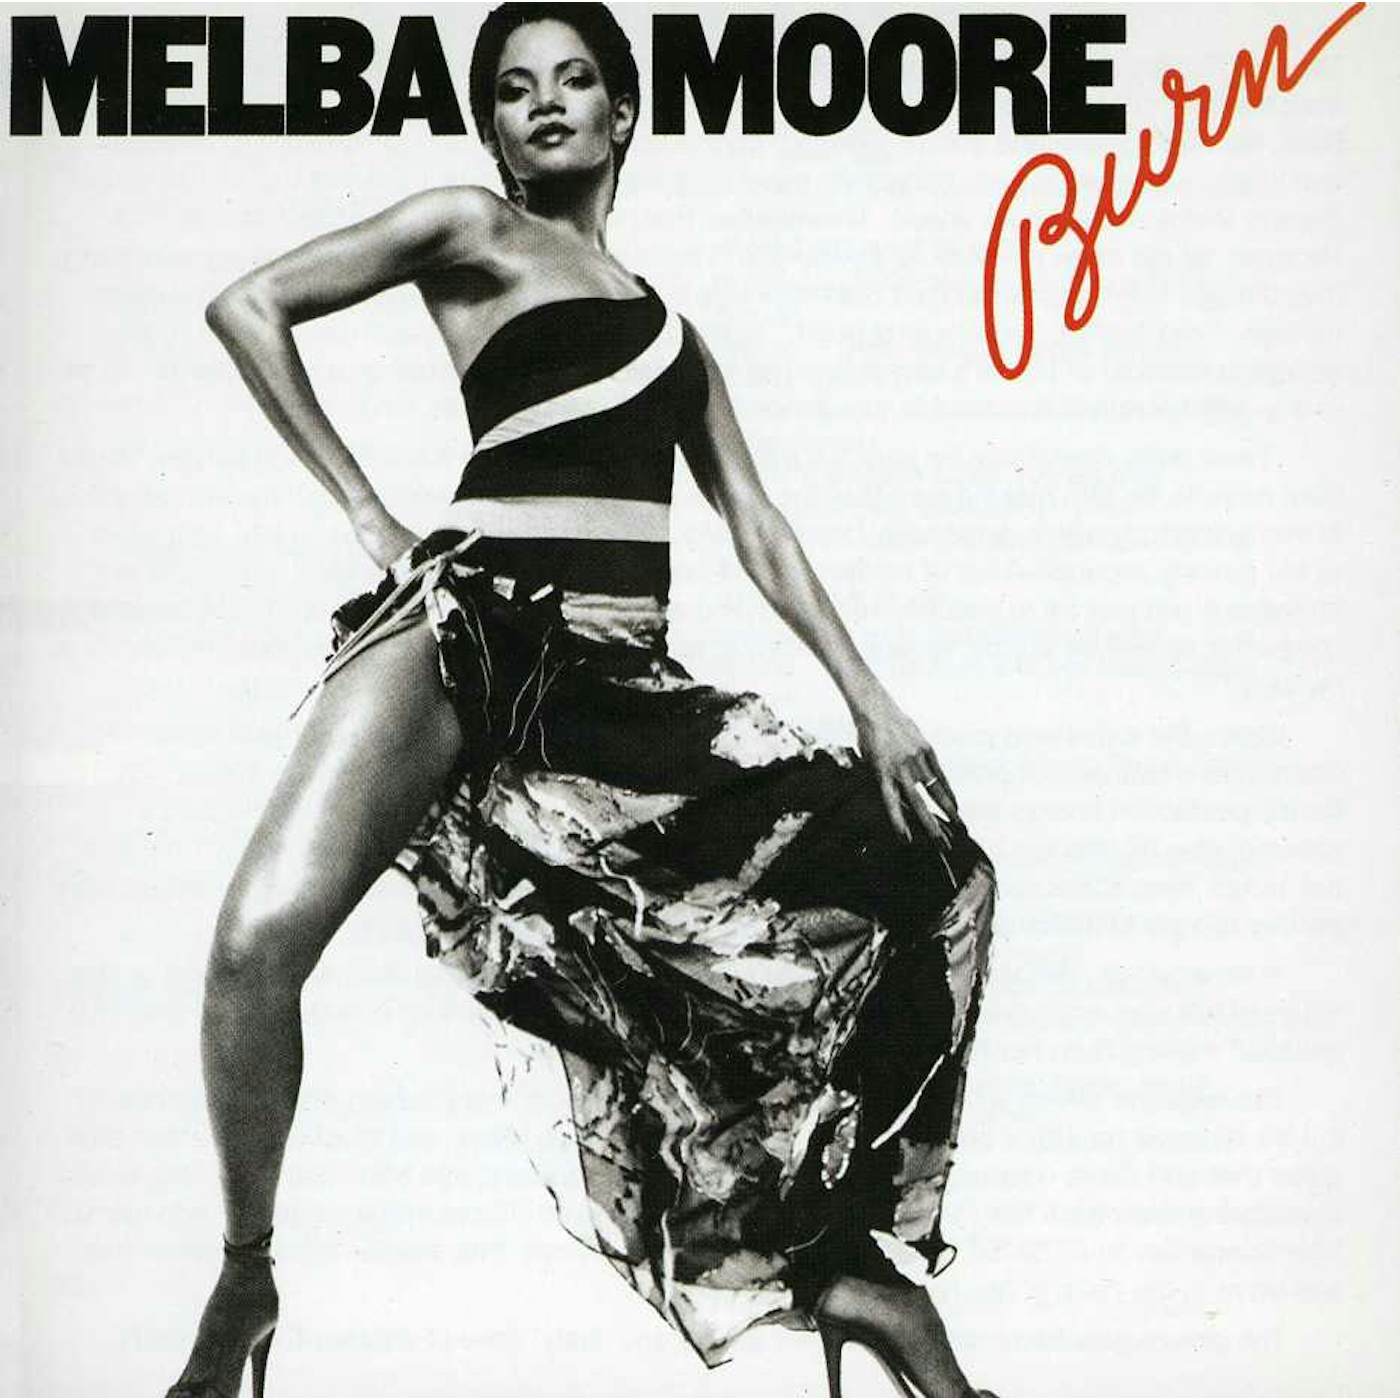 Melba Moore BURN (BONUS TRACKS EDITION) CD